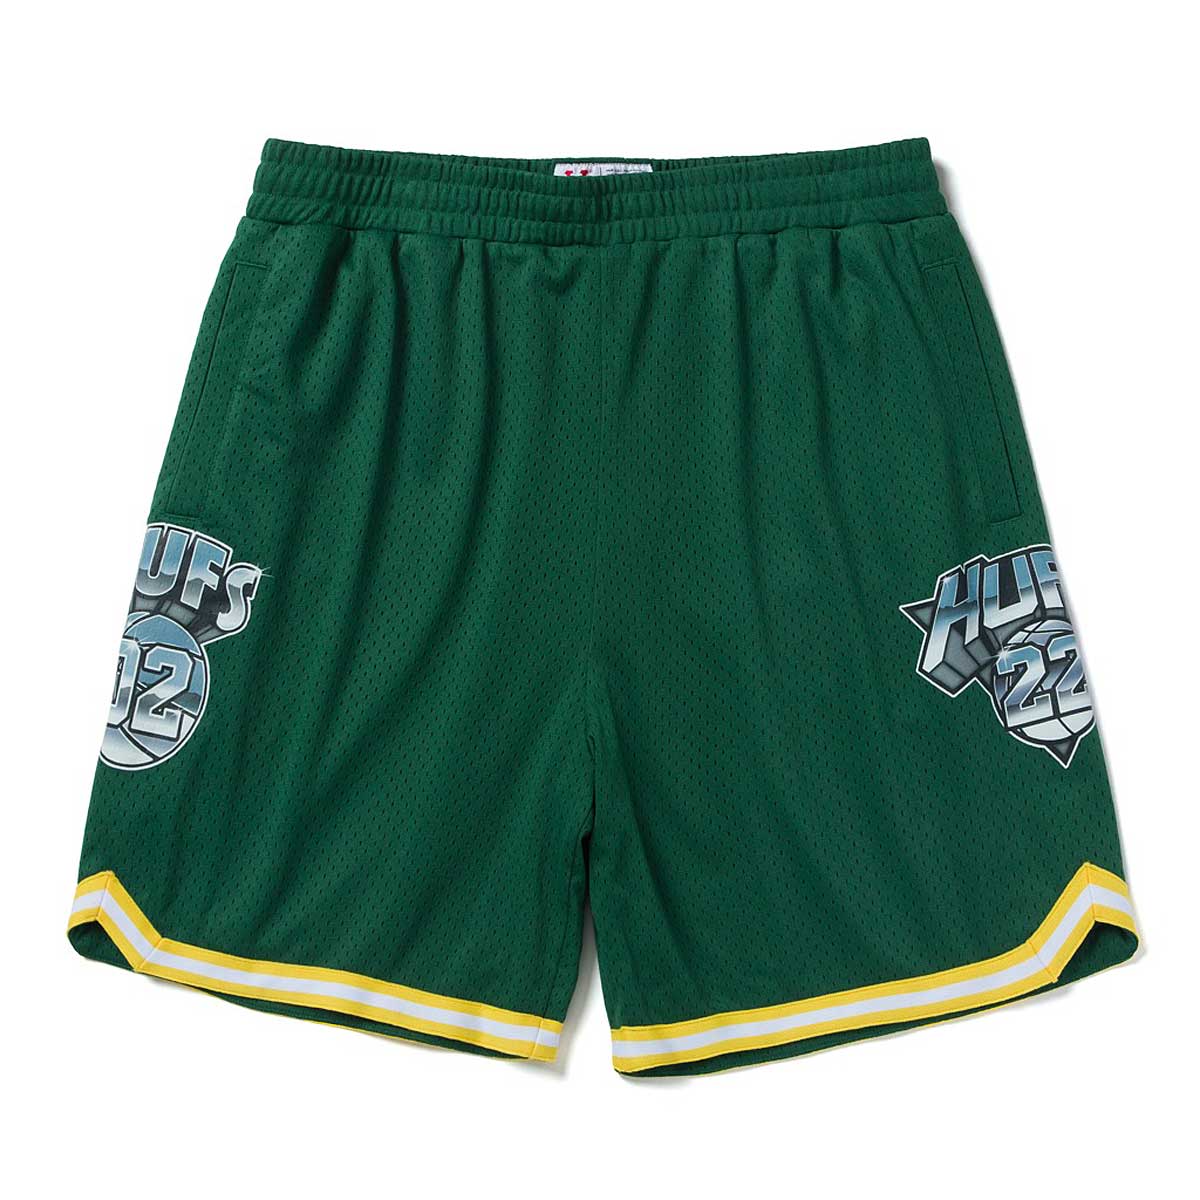 Huf Basketball Shorts, Green